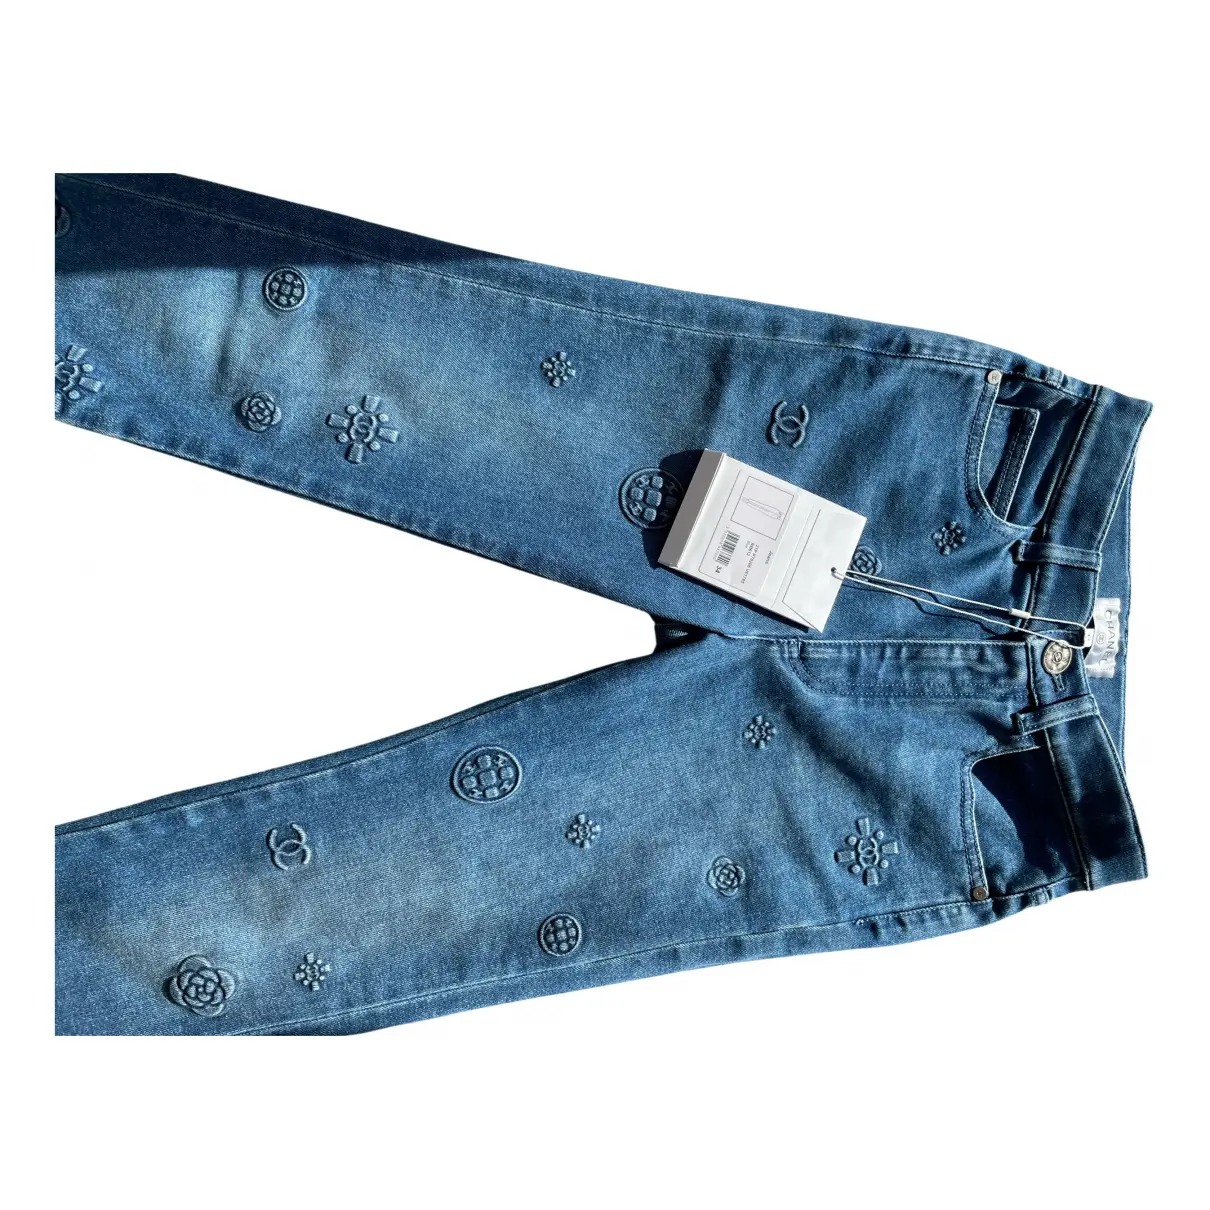 Buy Chanel Slim jeans online